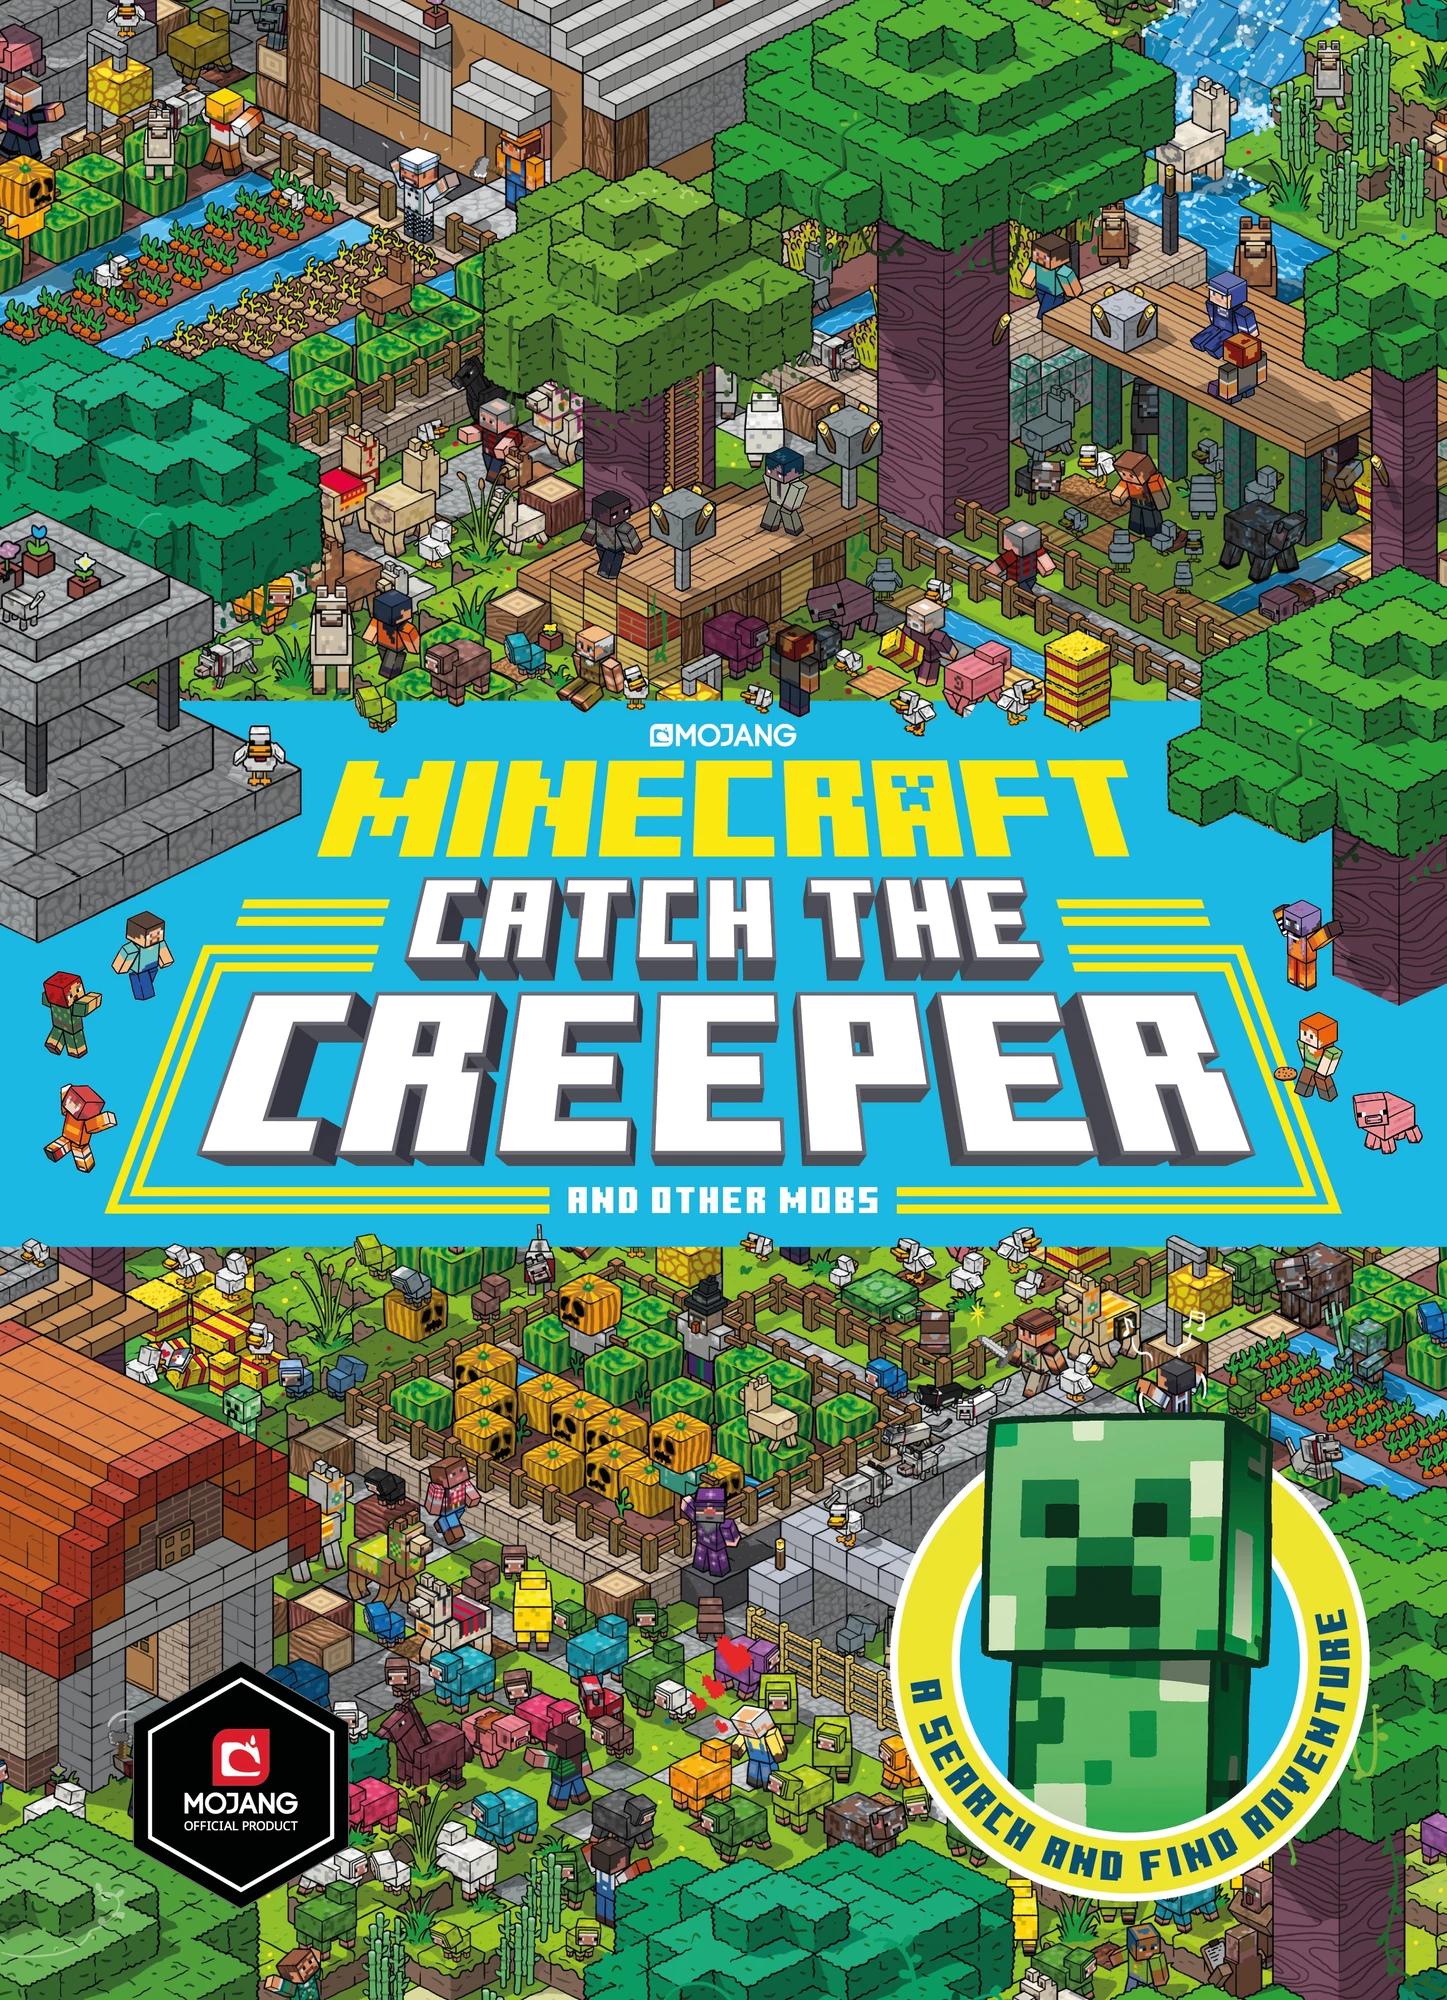 Creeper in Minecraft